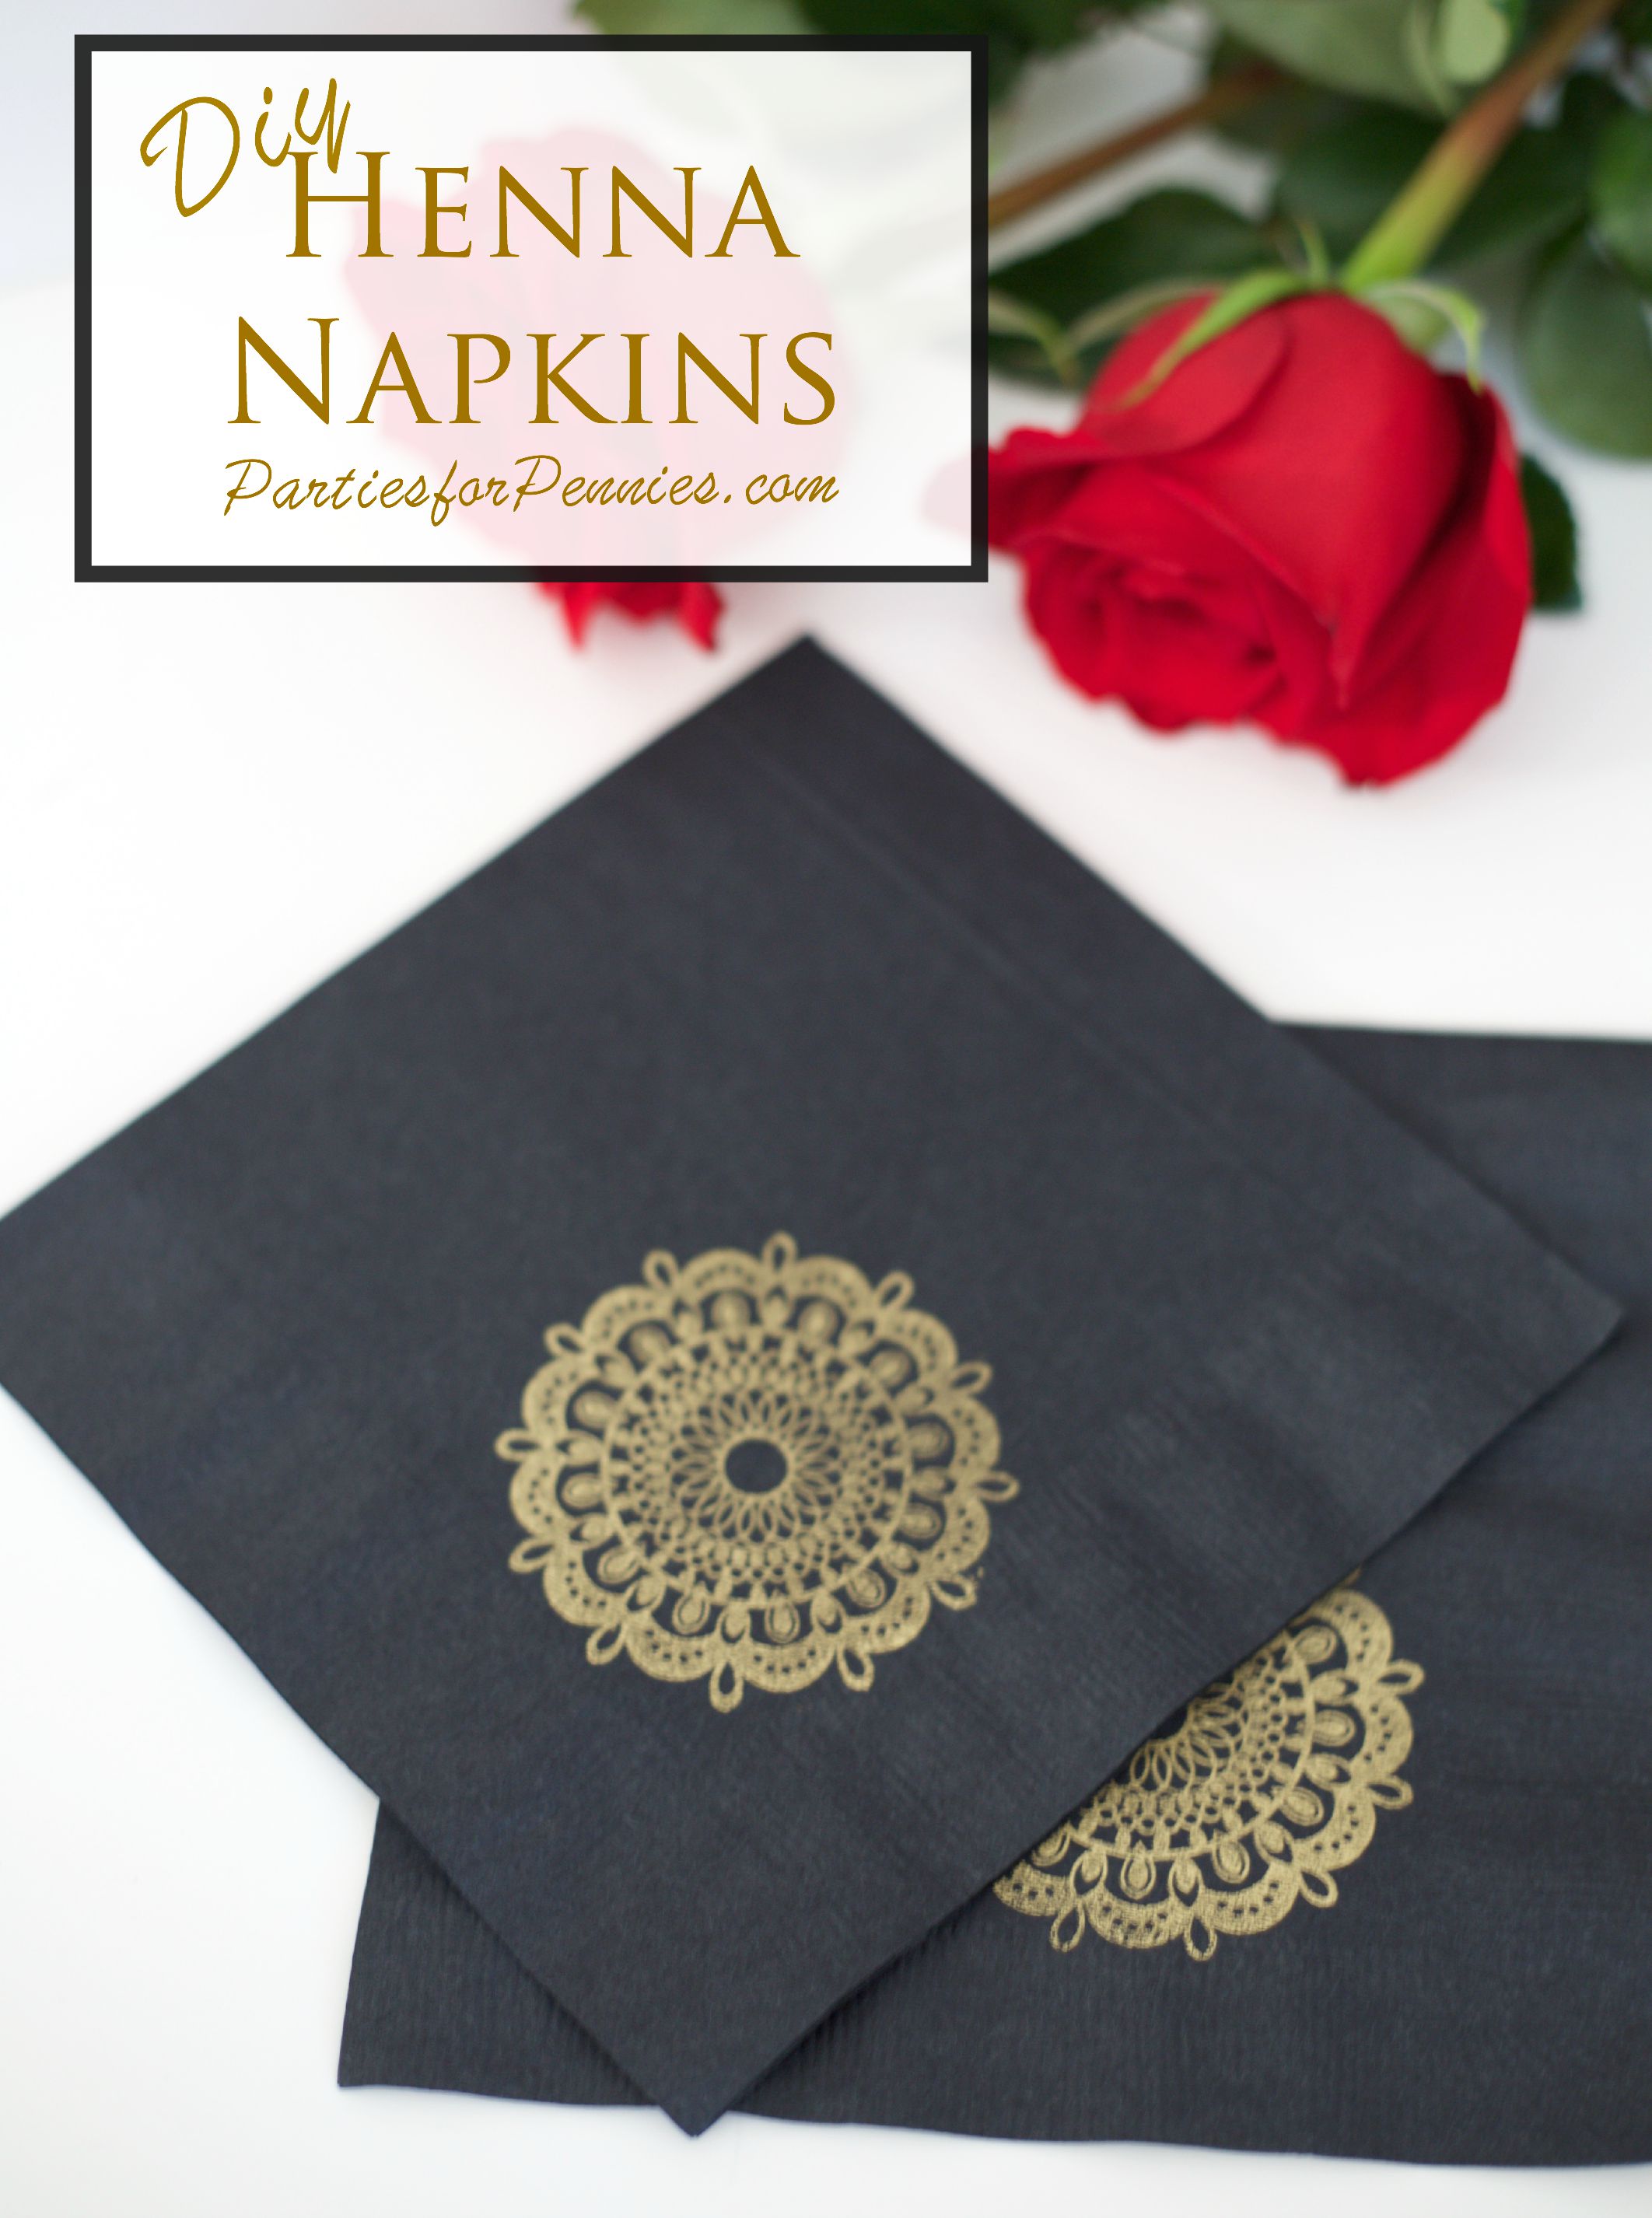 Diy Napkins | Personalized Napkins | Indian Wedding | Henna Napkins | #diy #napkins #partysupplies